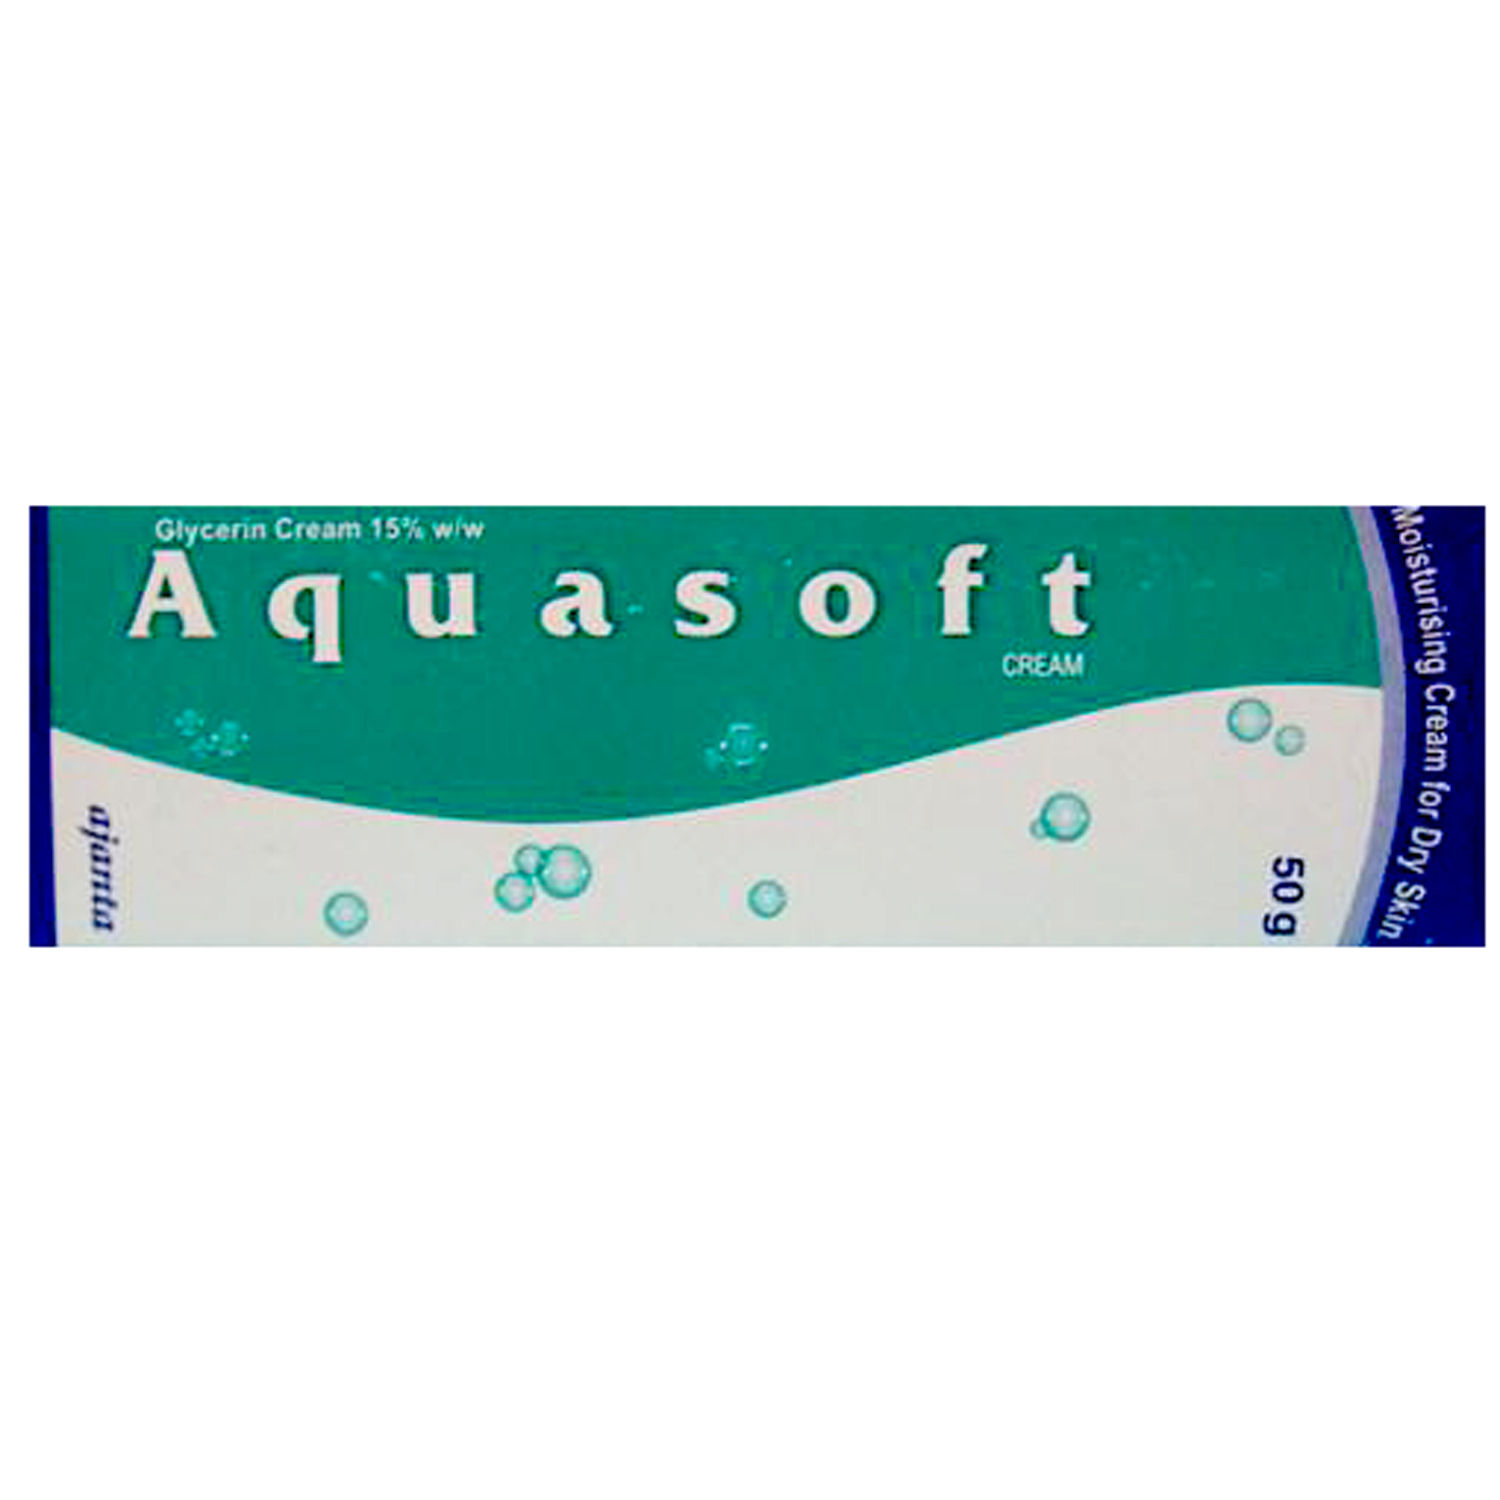 Aquasoft Cream, 50 gm, Pack of 1 